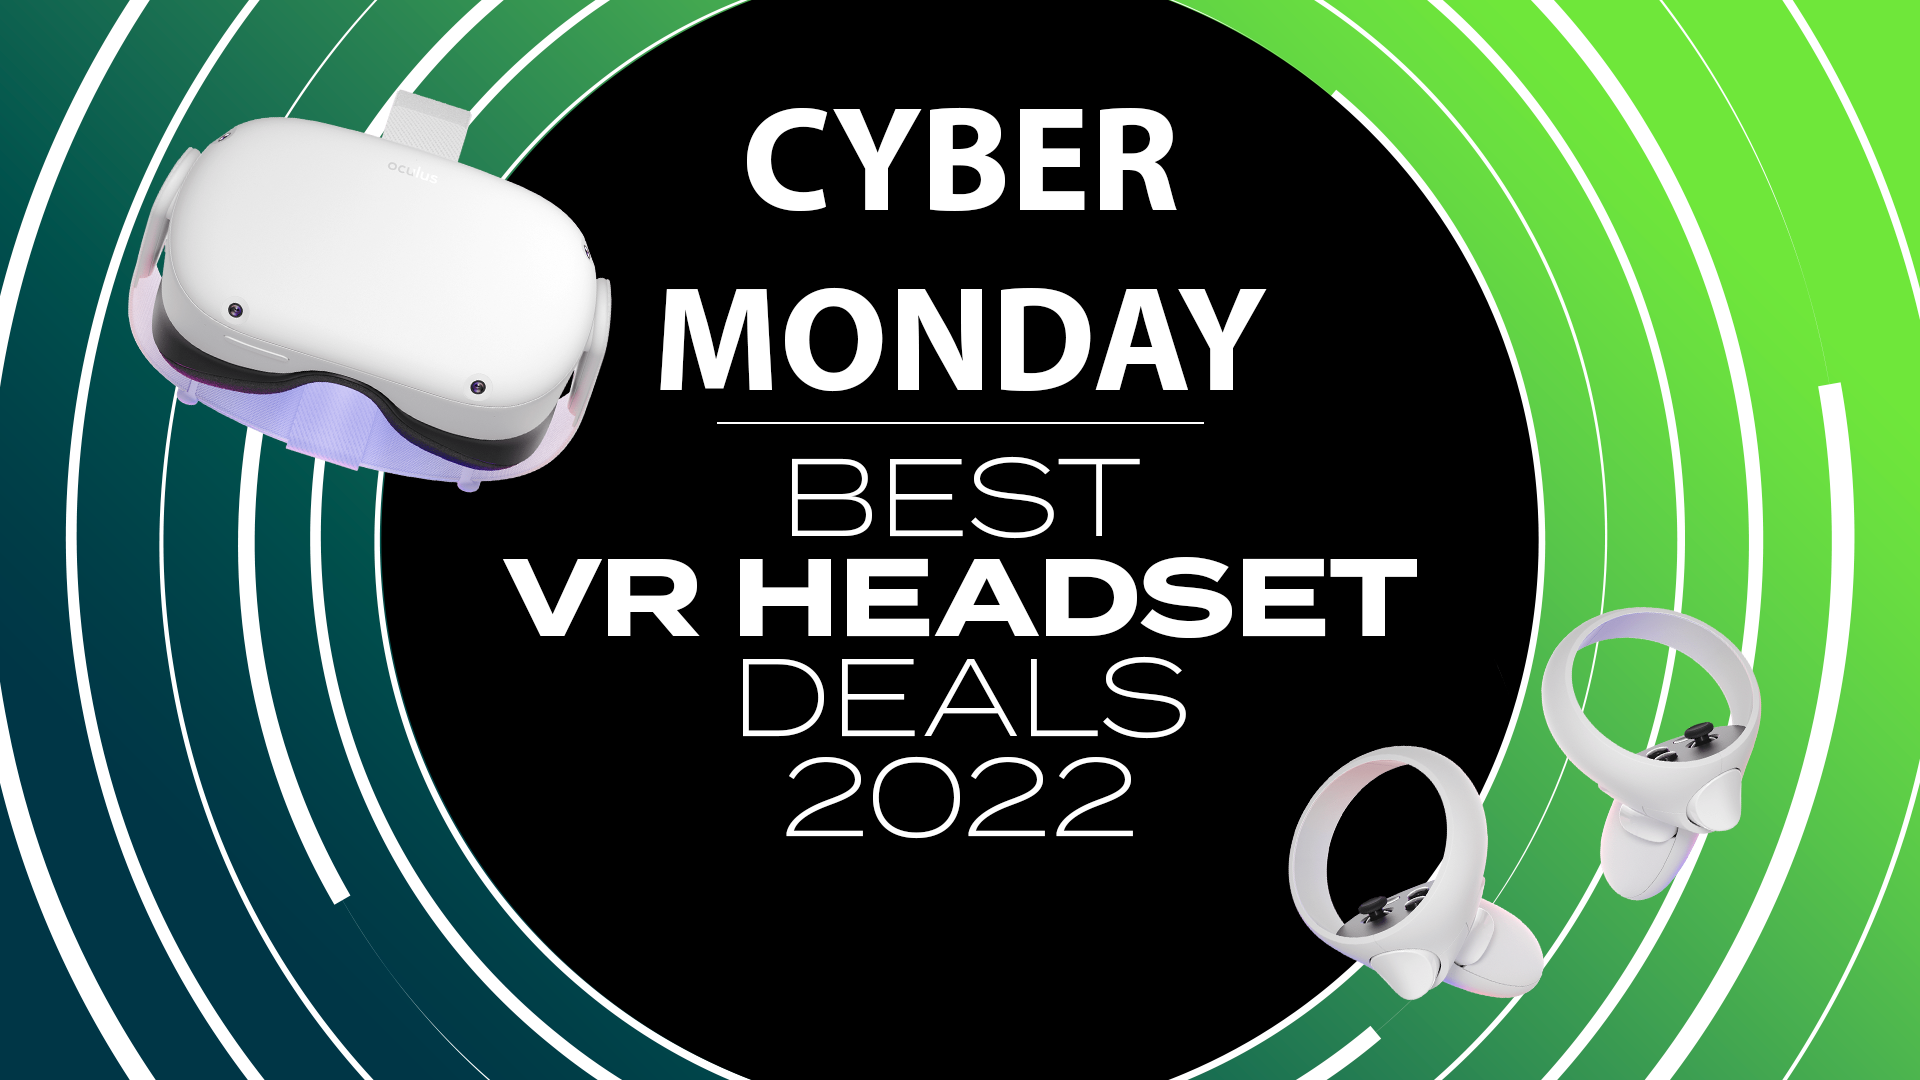 Cyber Monday VR Headset Deals 2022